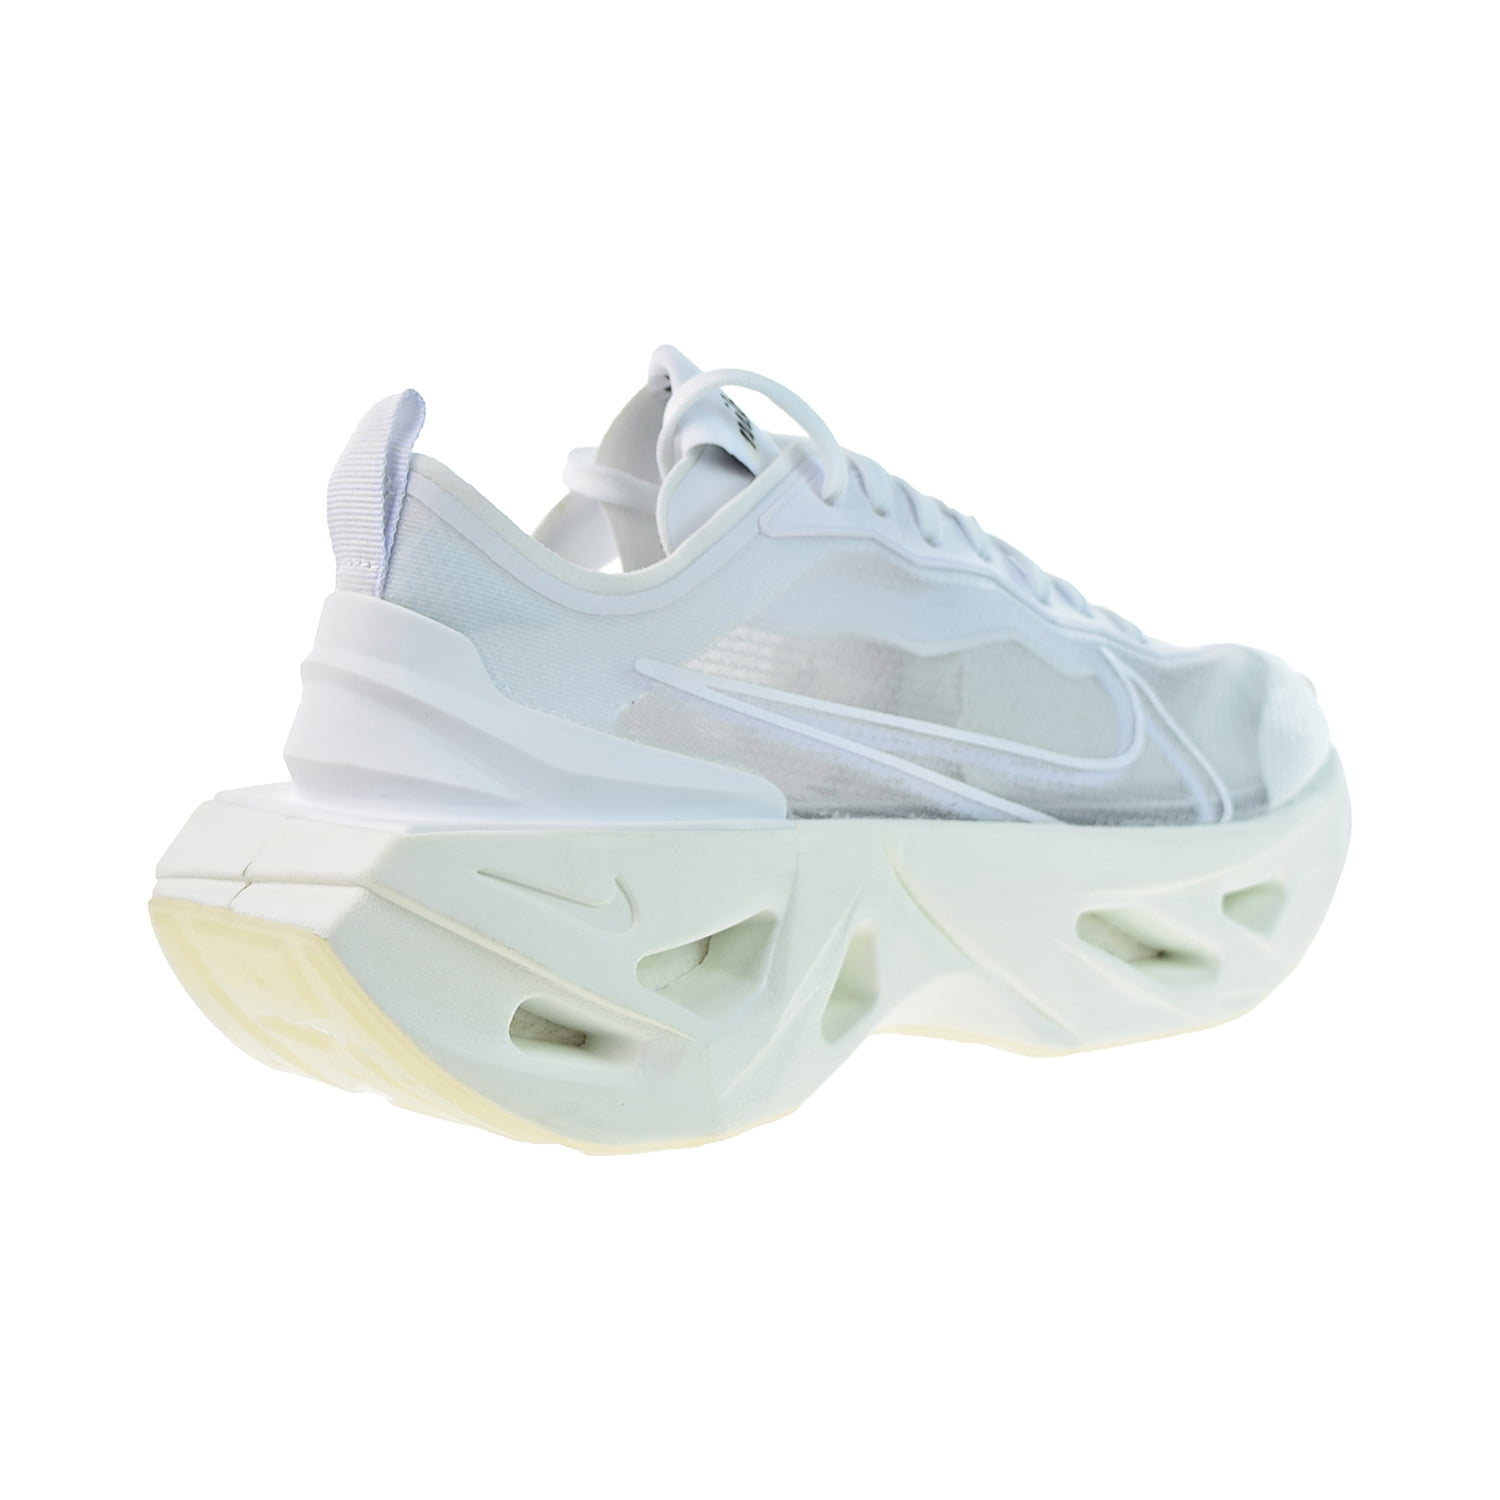 Nike Zoom X Vista Grind Women's Shoes White-Sail cq9500-101 -